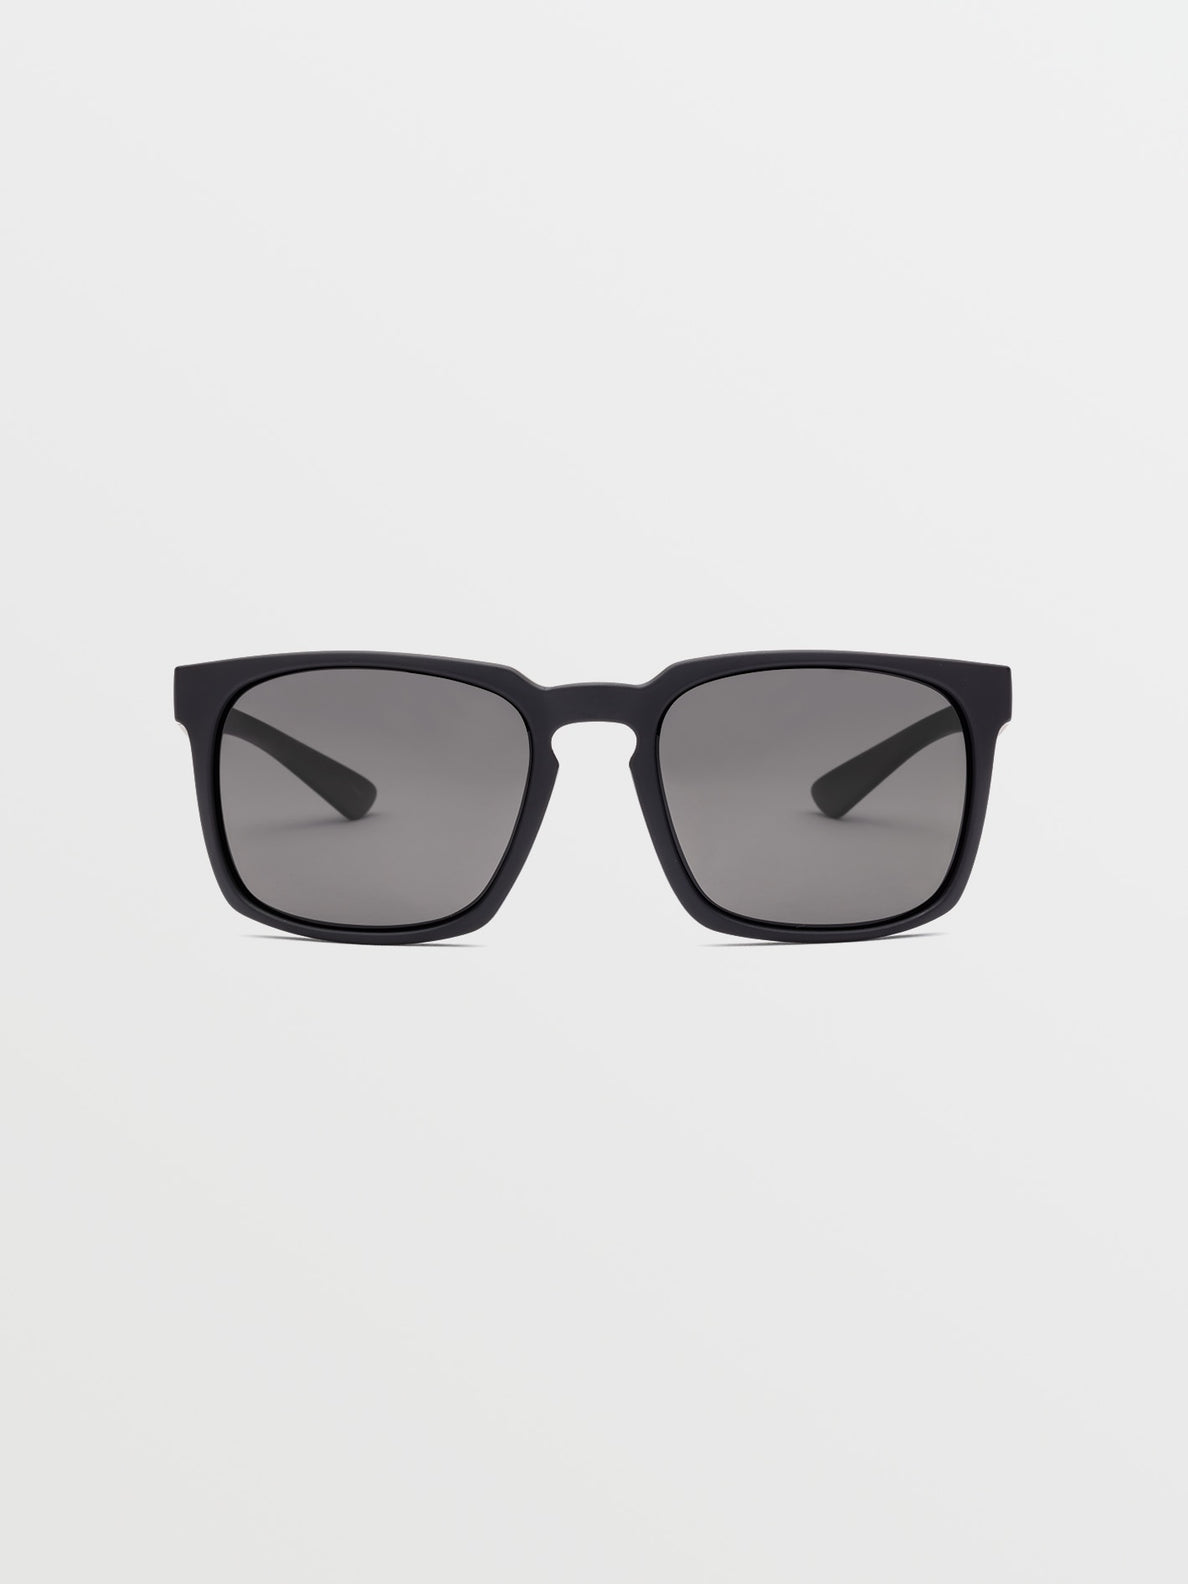 Alive Sunglasses - Matte Black / Grey Polar